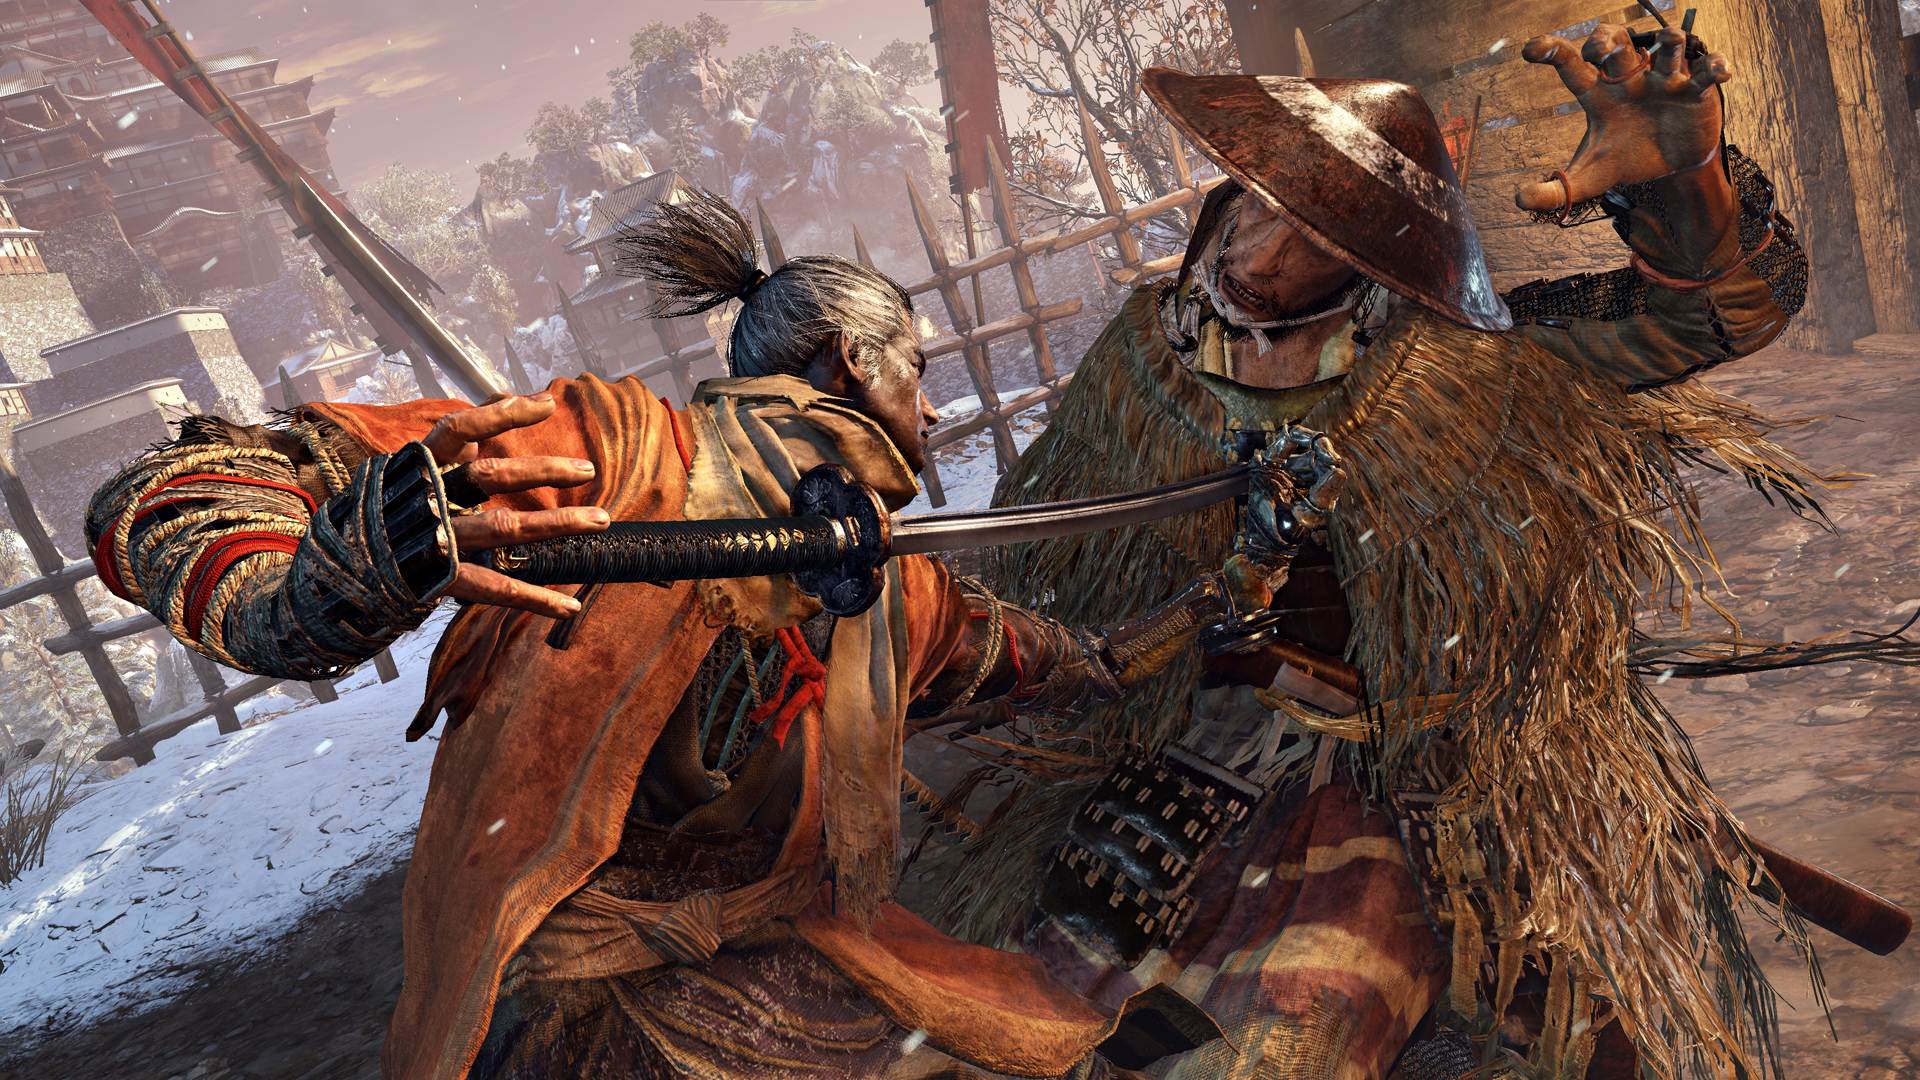 Samurai stabs a man.